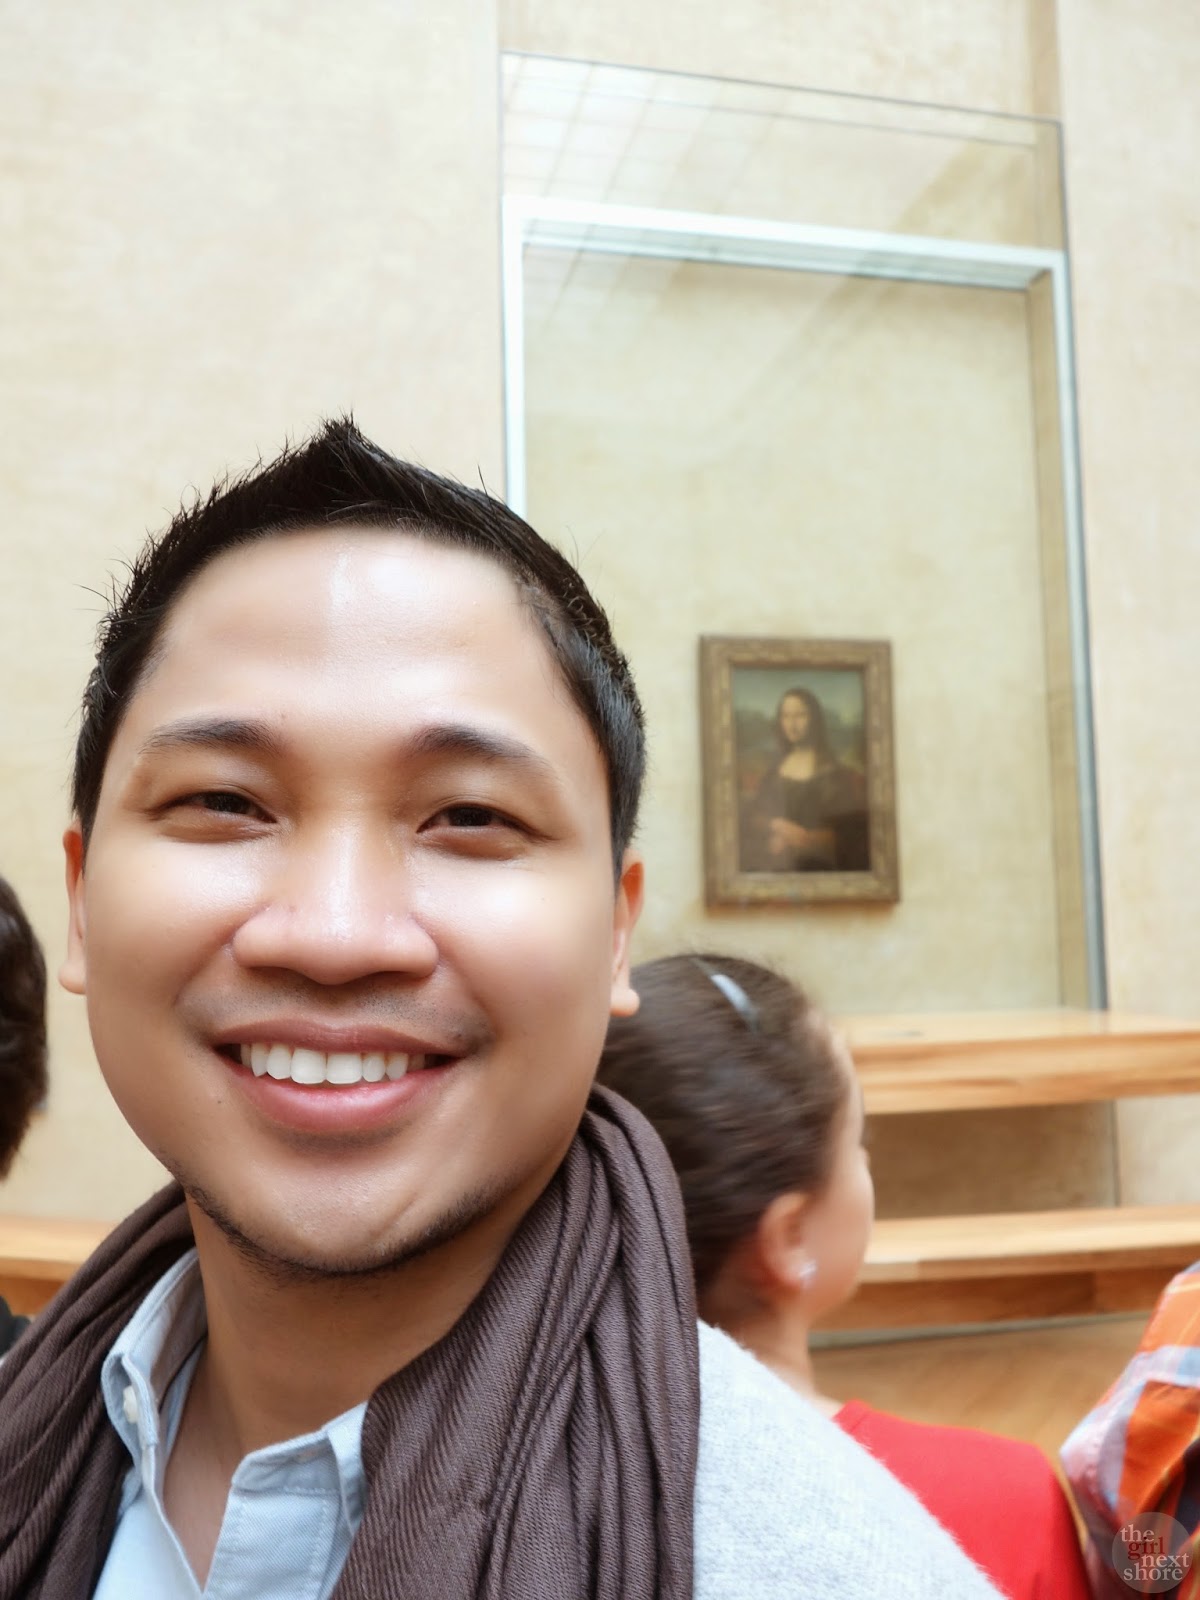 Mona Lisa at The Louvre | Girl Next Shore